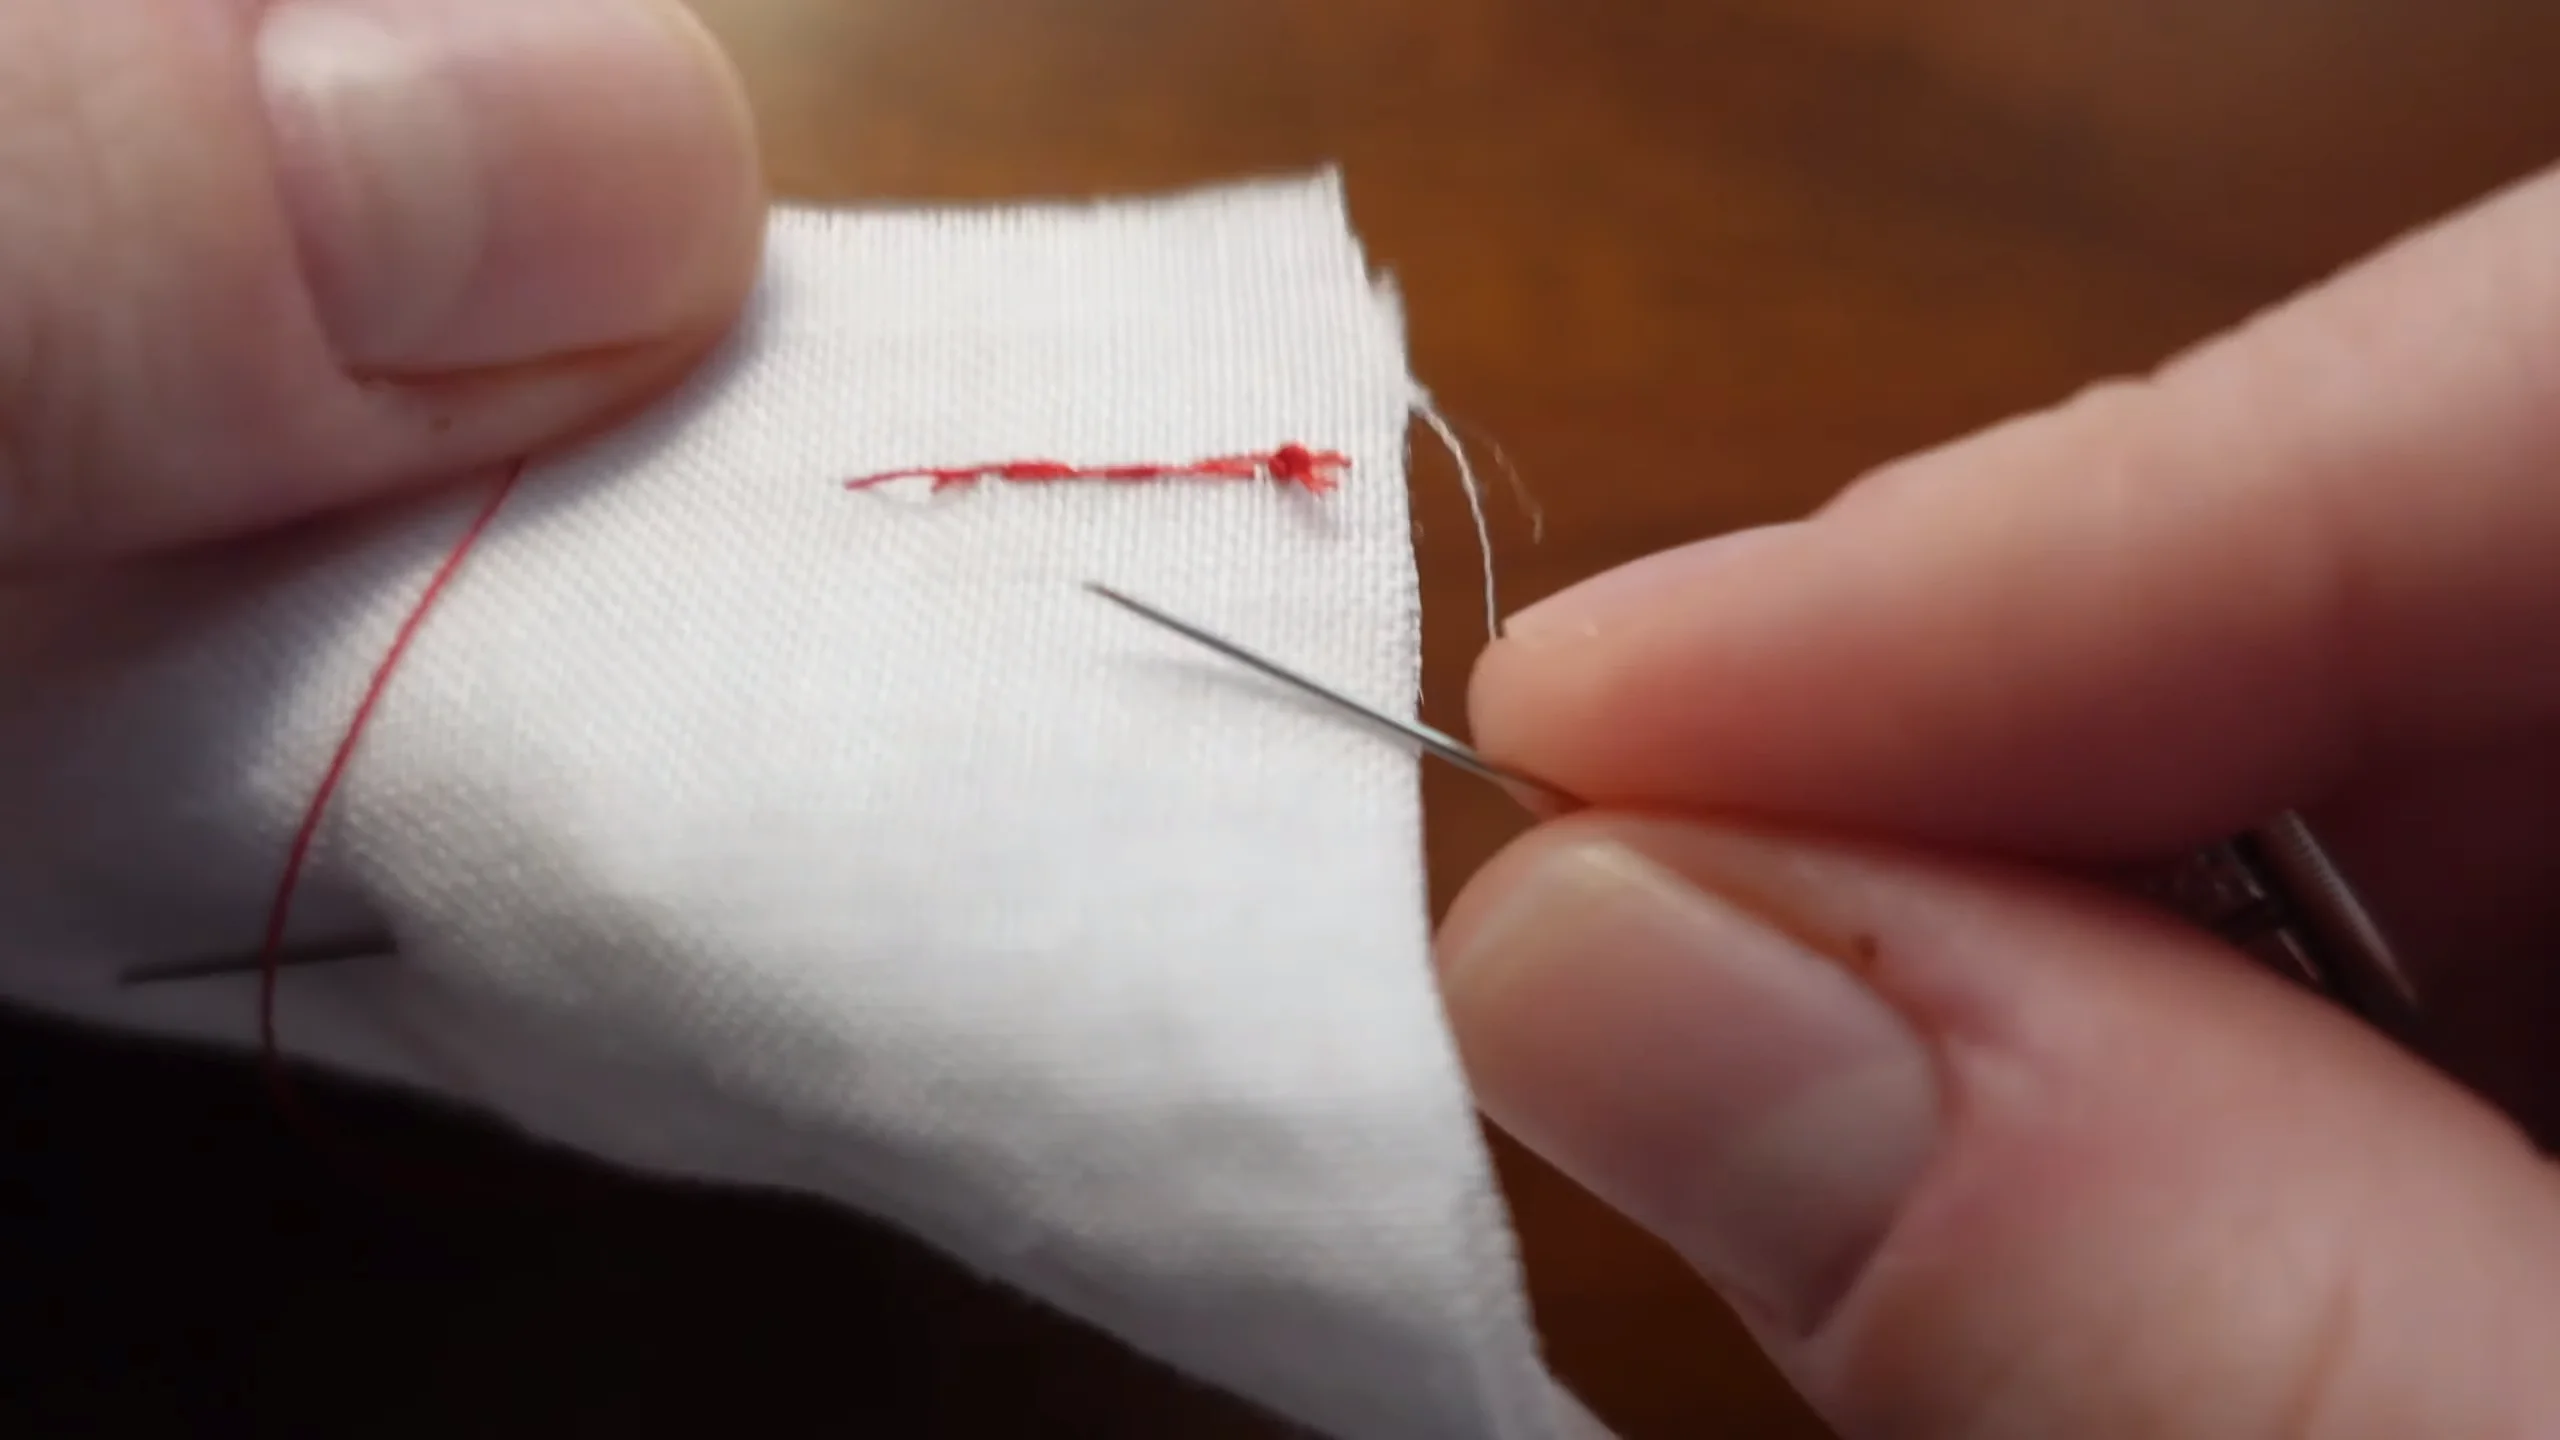 stitching the fabric